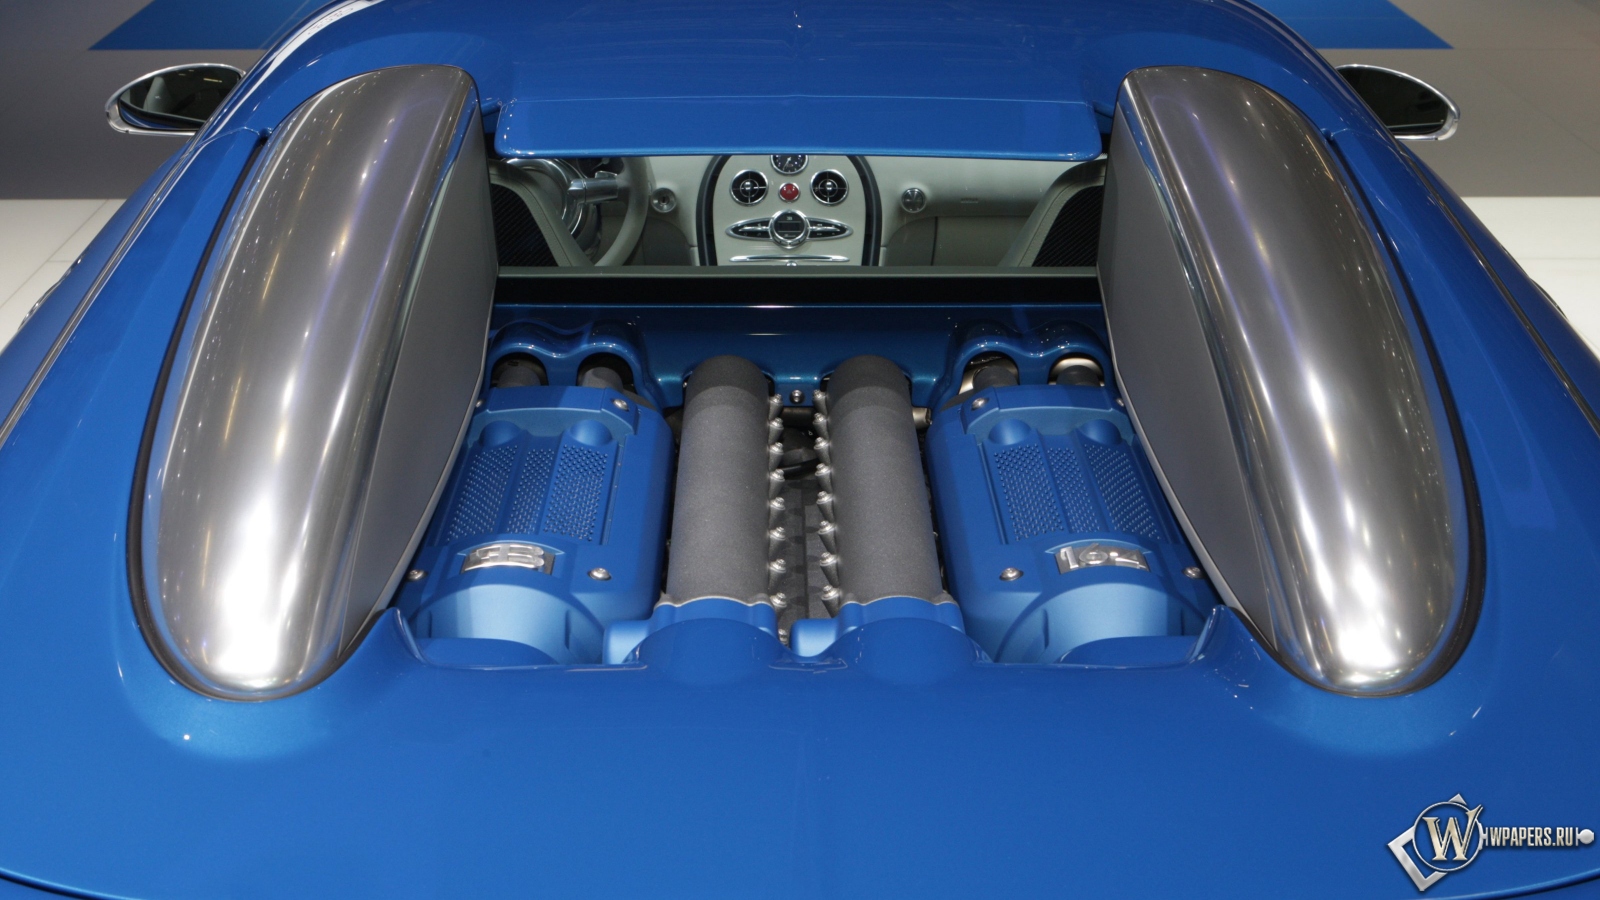 Bugatti Veyron Bleu Centenaire (2009) 1600x900